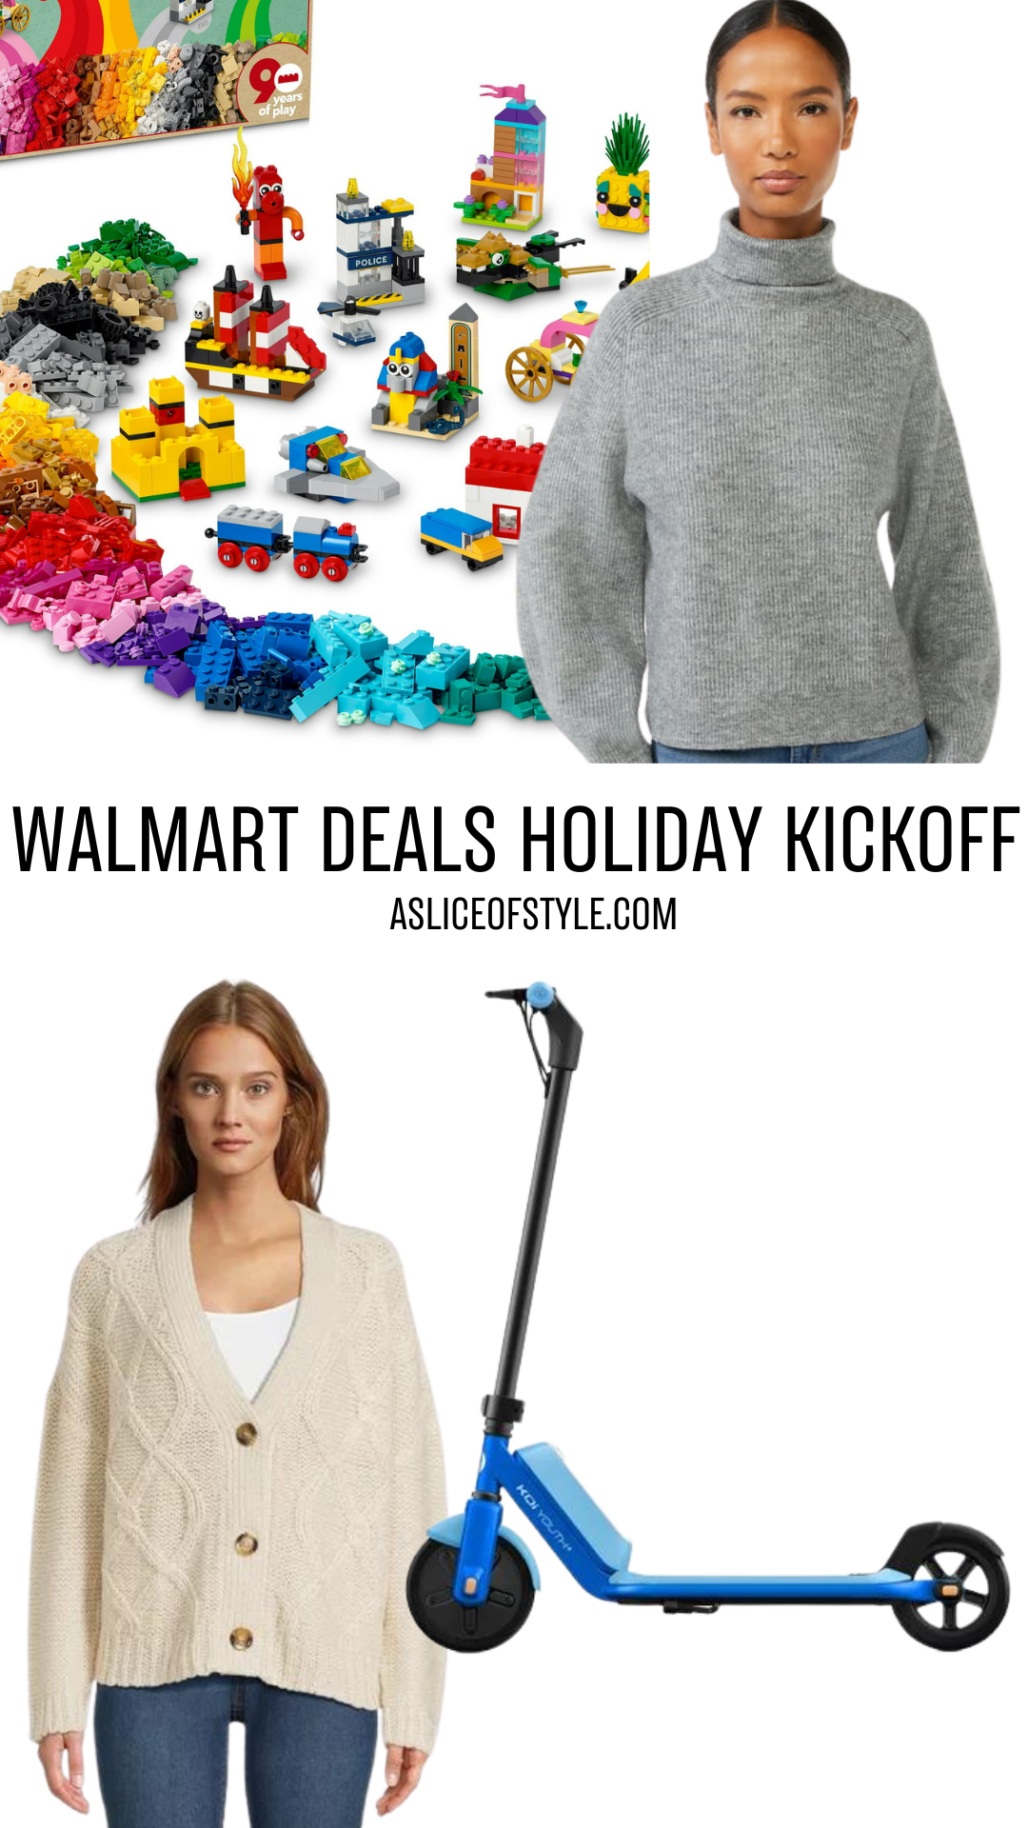 Walmart deals